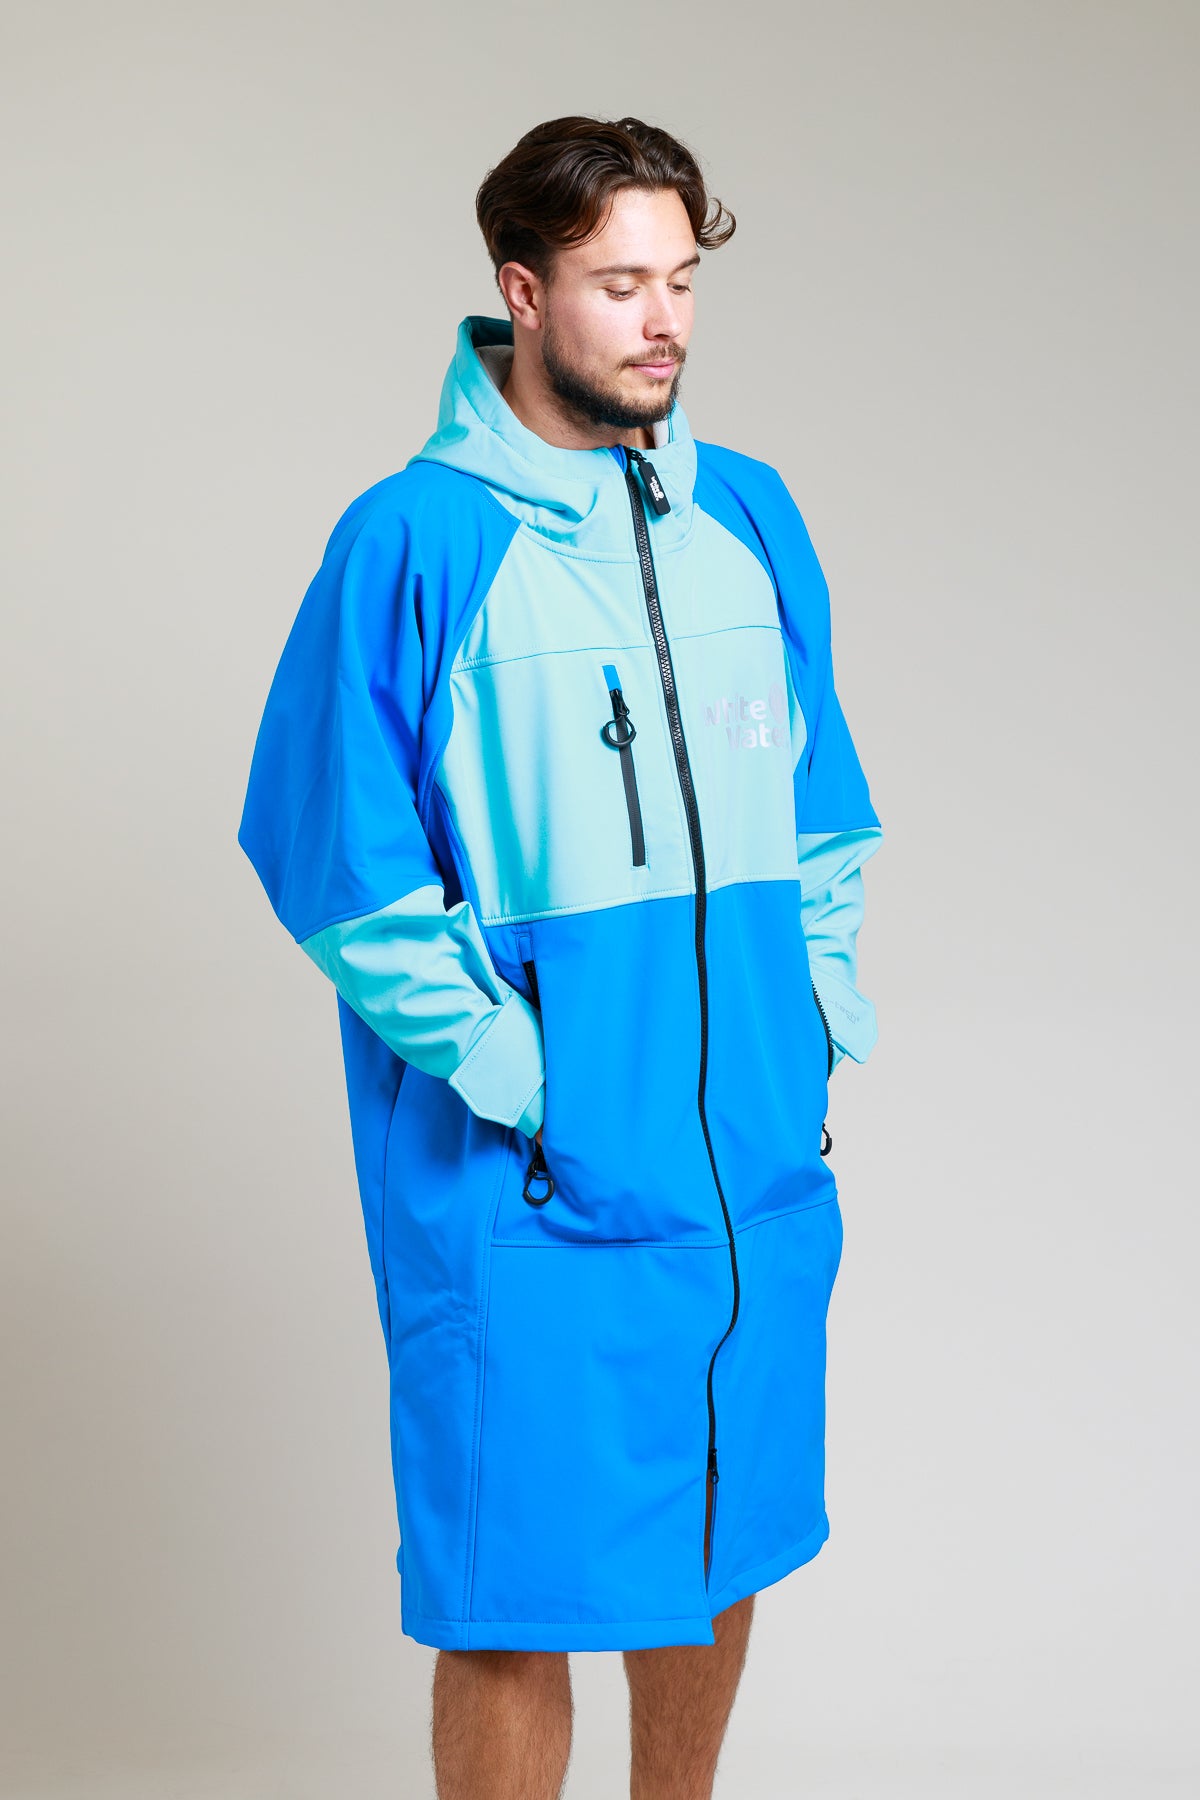 Softshell badjas voor volwassenen - kobaltblauw